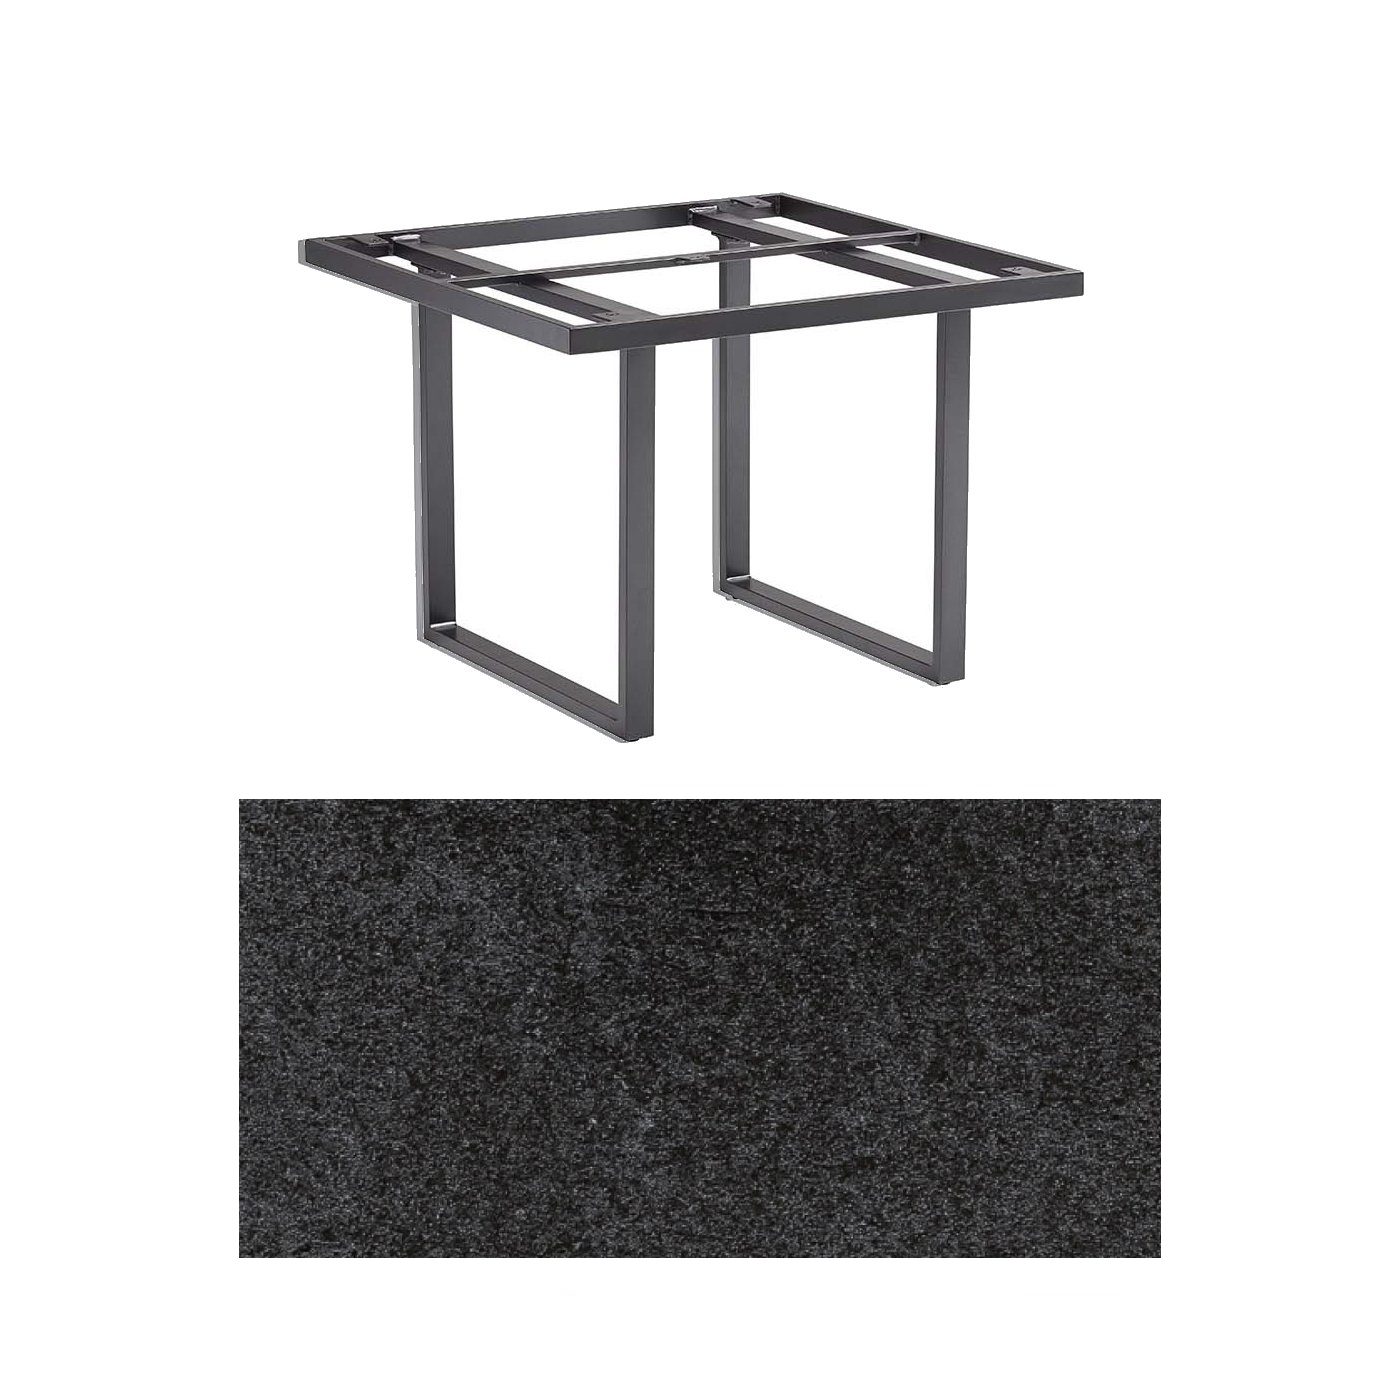 Kettler "Skate" Gartentisch Casual Dining, Gestell Aluminium anthrazit, Tischplatte HPL Stahl, 95x95 cm, Höhe ca. 68 cm